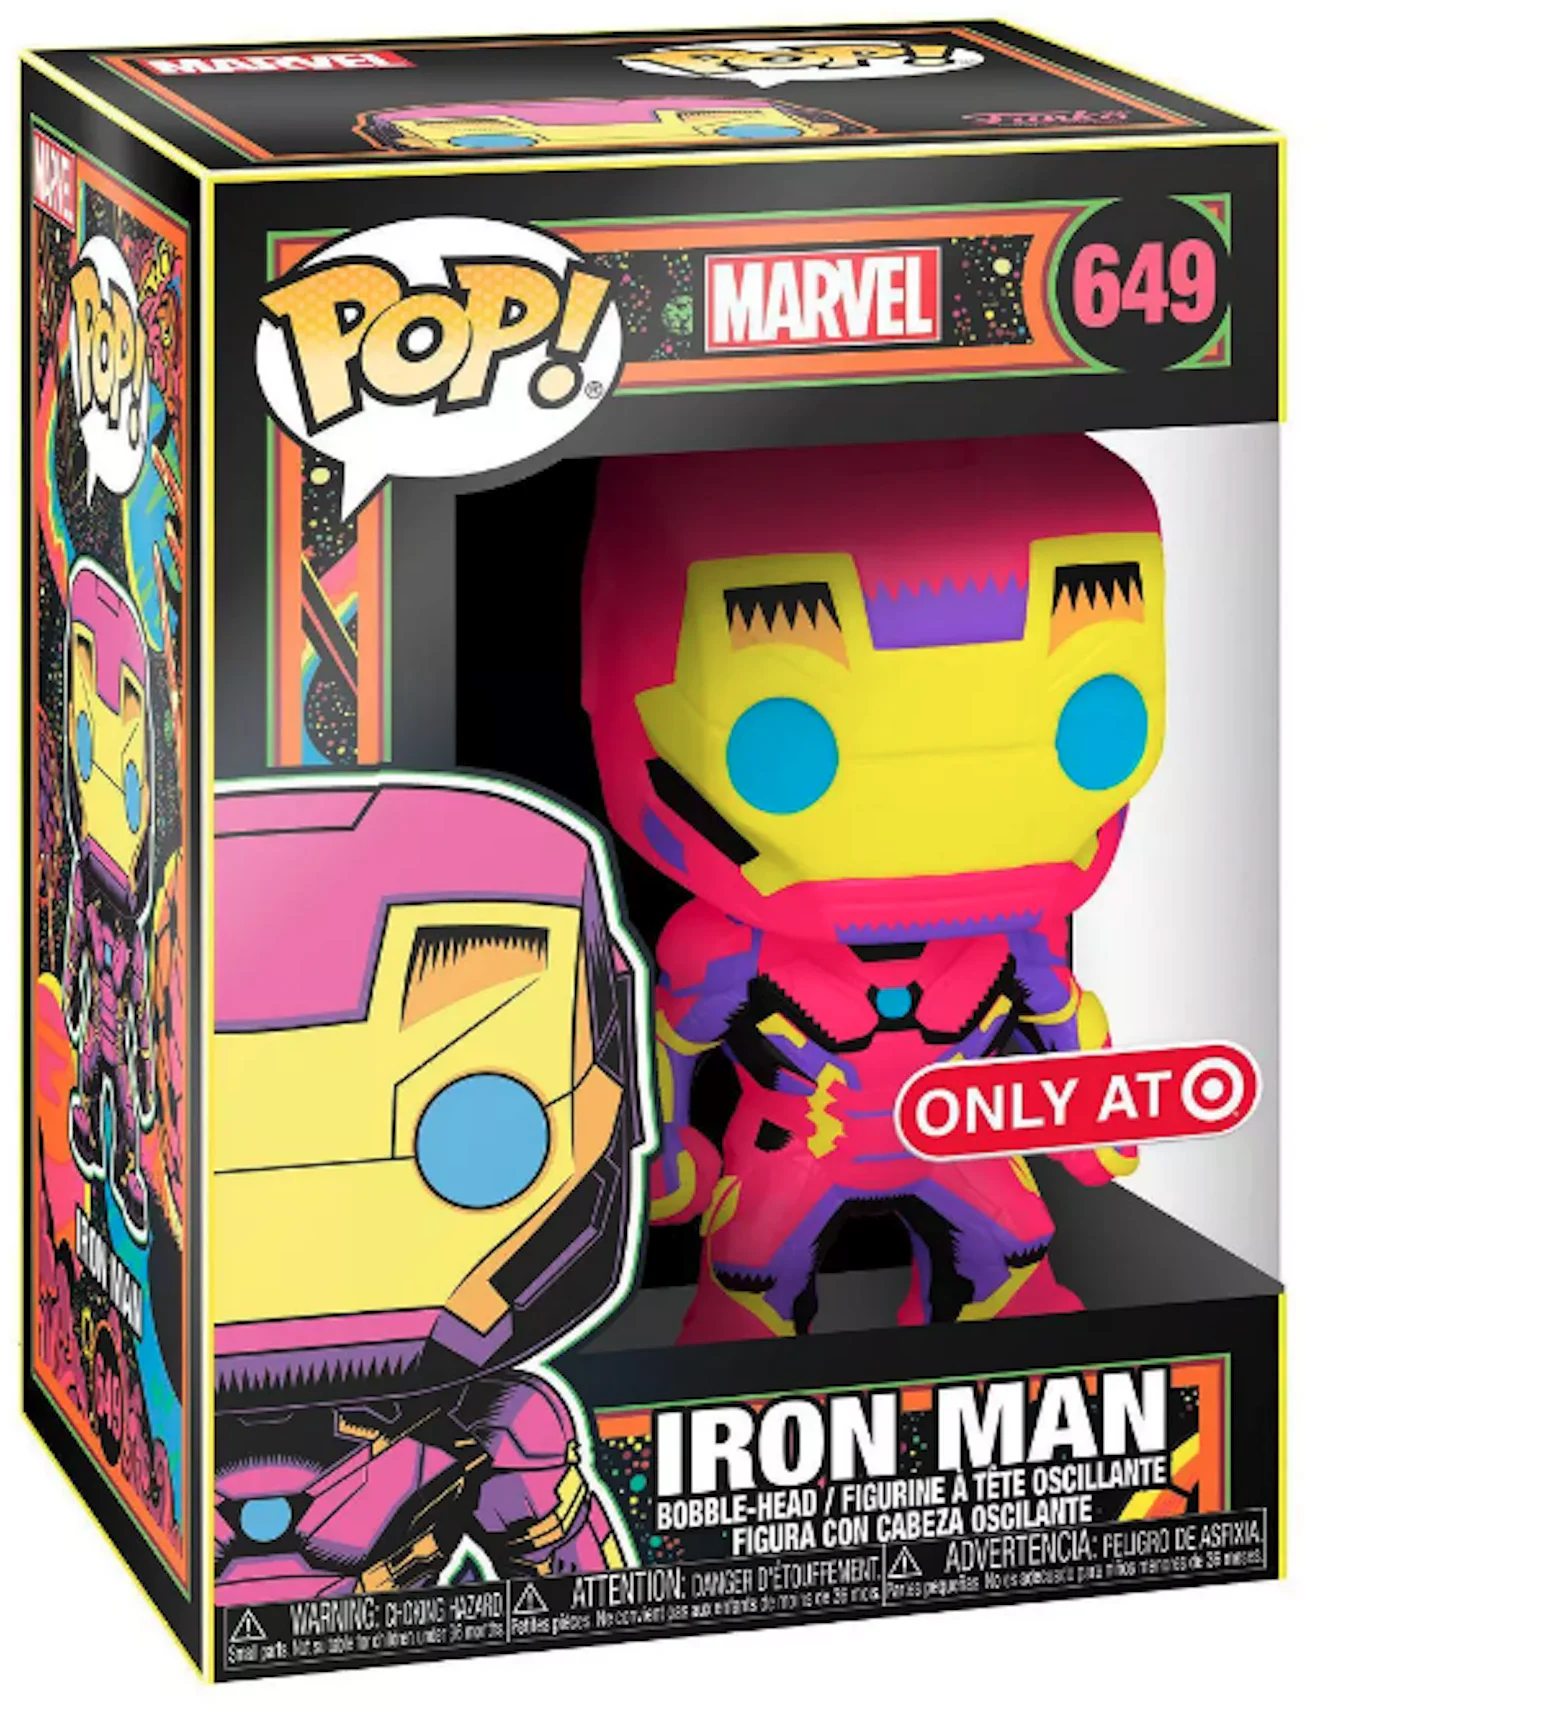 Funko Pop! Marvel Iron Man Black Light Target Exclusive Bobble-Head #649